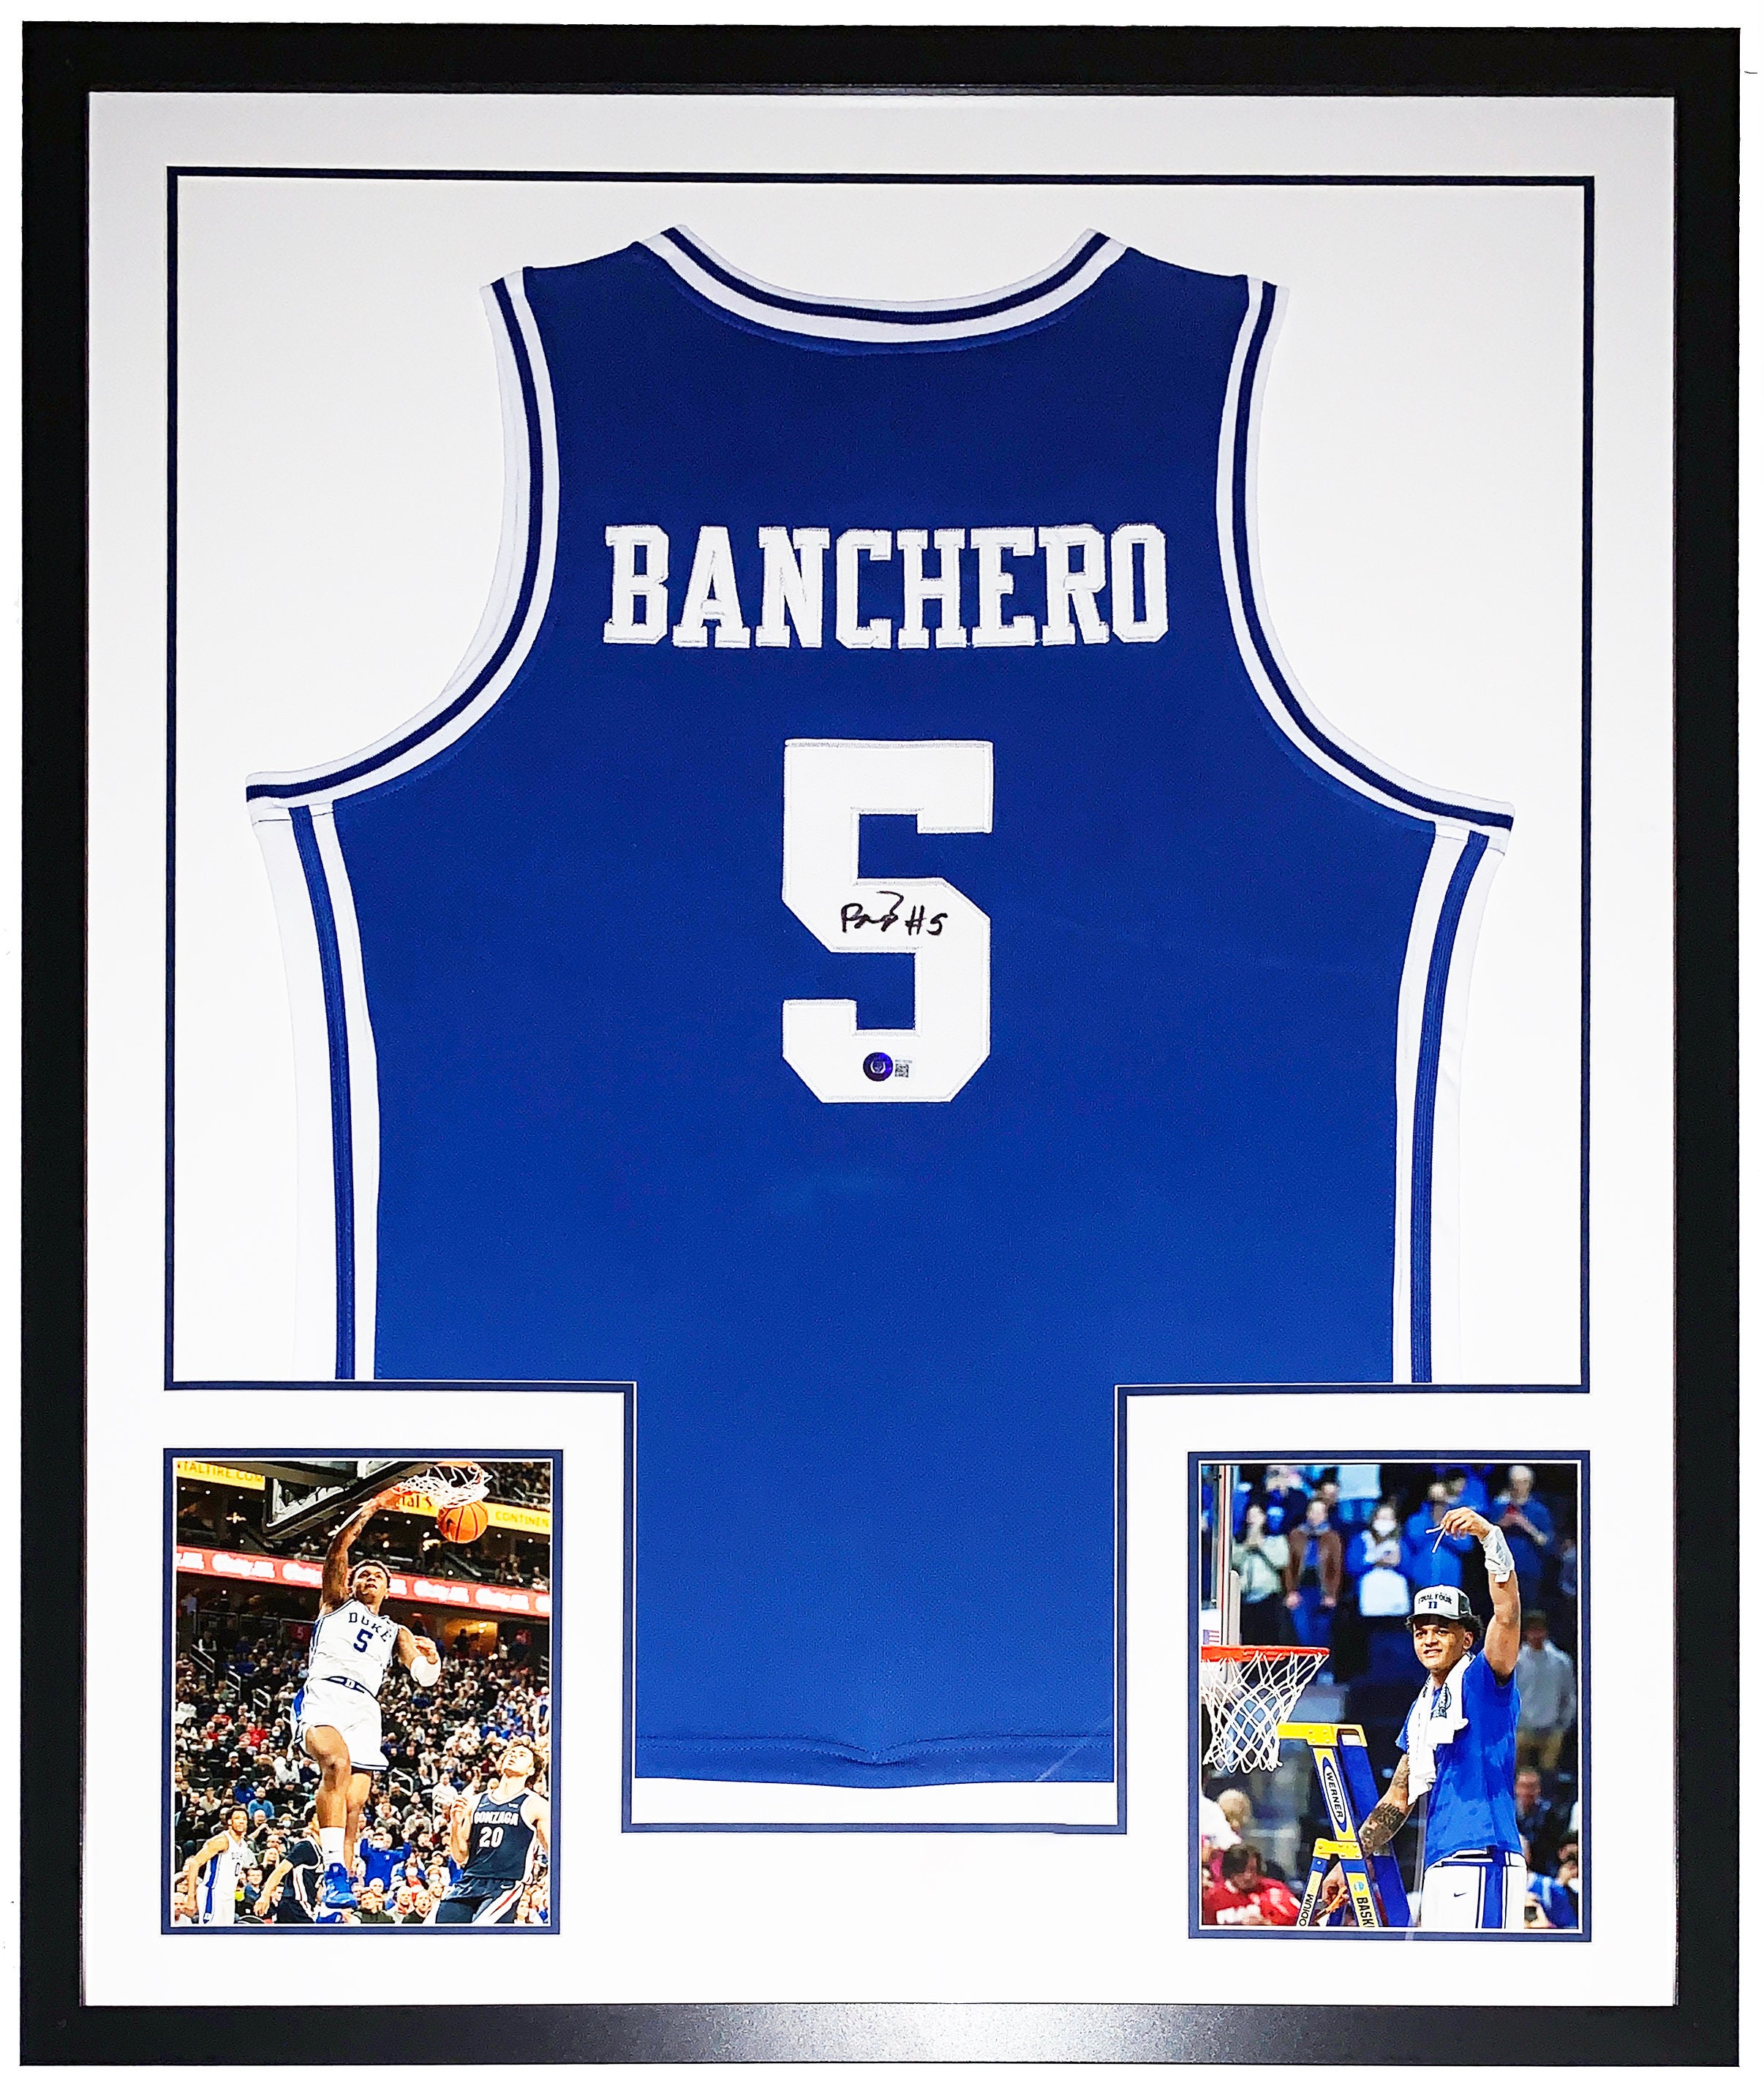 Paolo Banchero - Orlando Magic Jersey Basketball Sticker for Sale